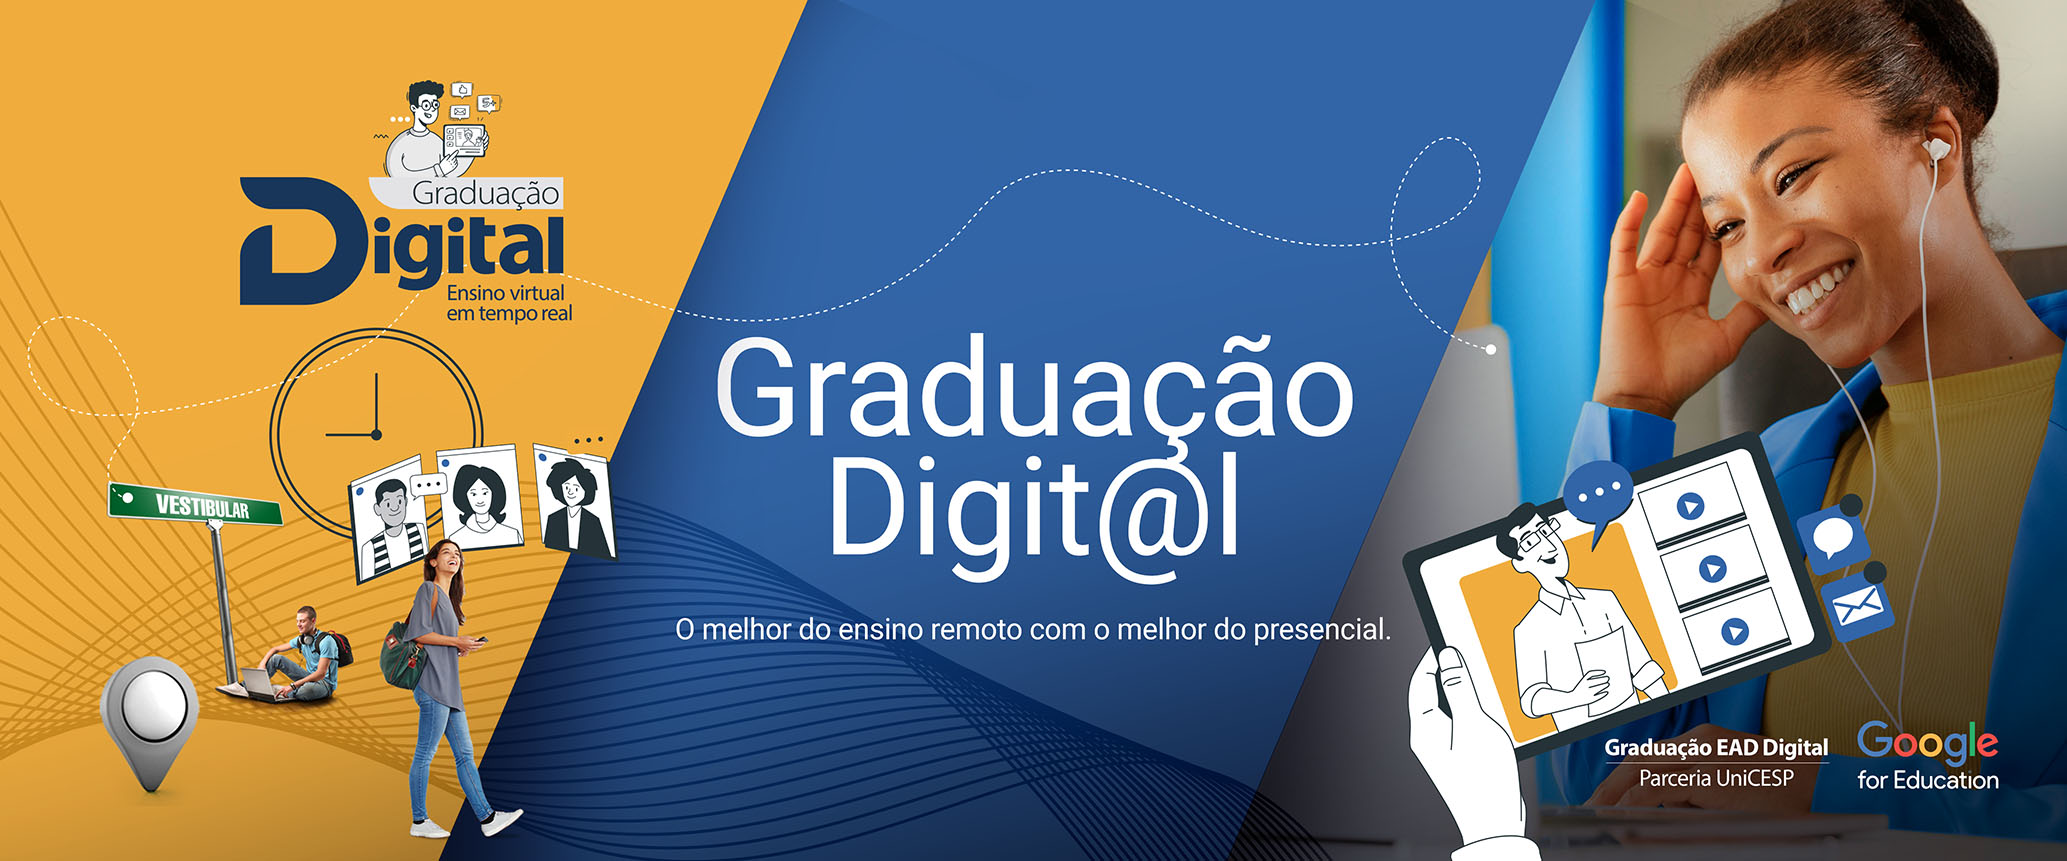 graduacao_digital_slide_home_NEUTRO (1)